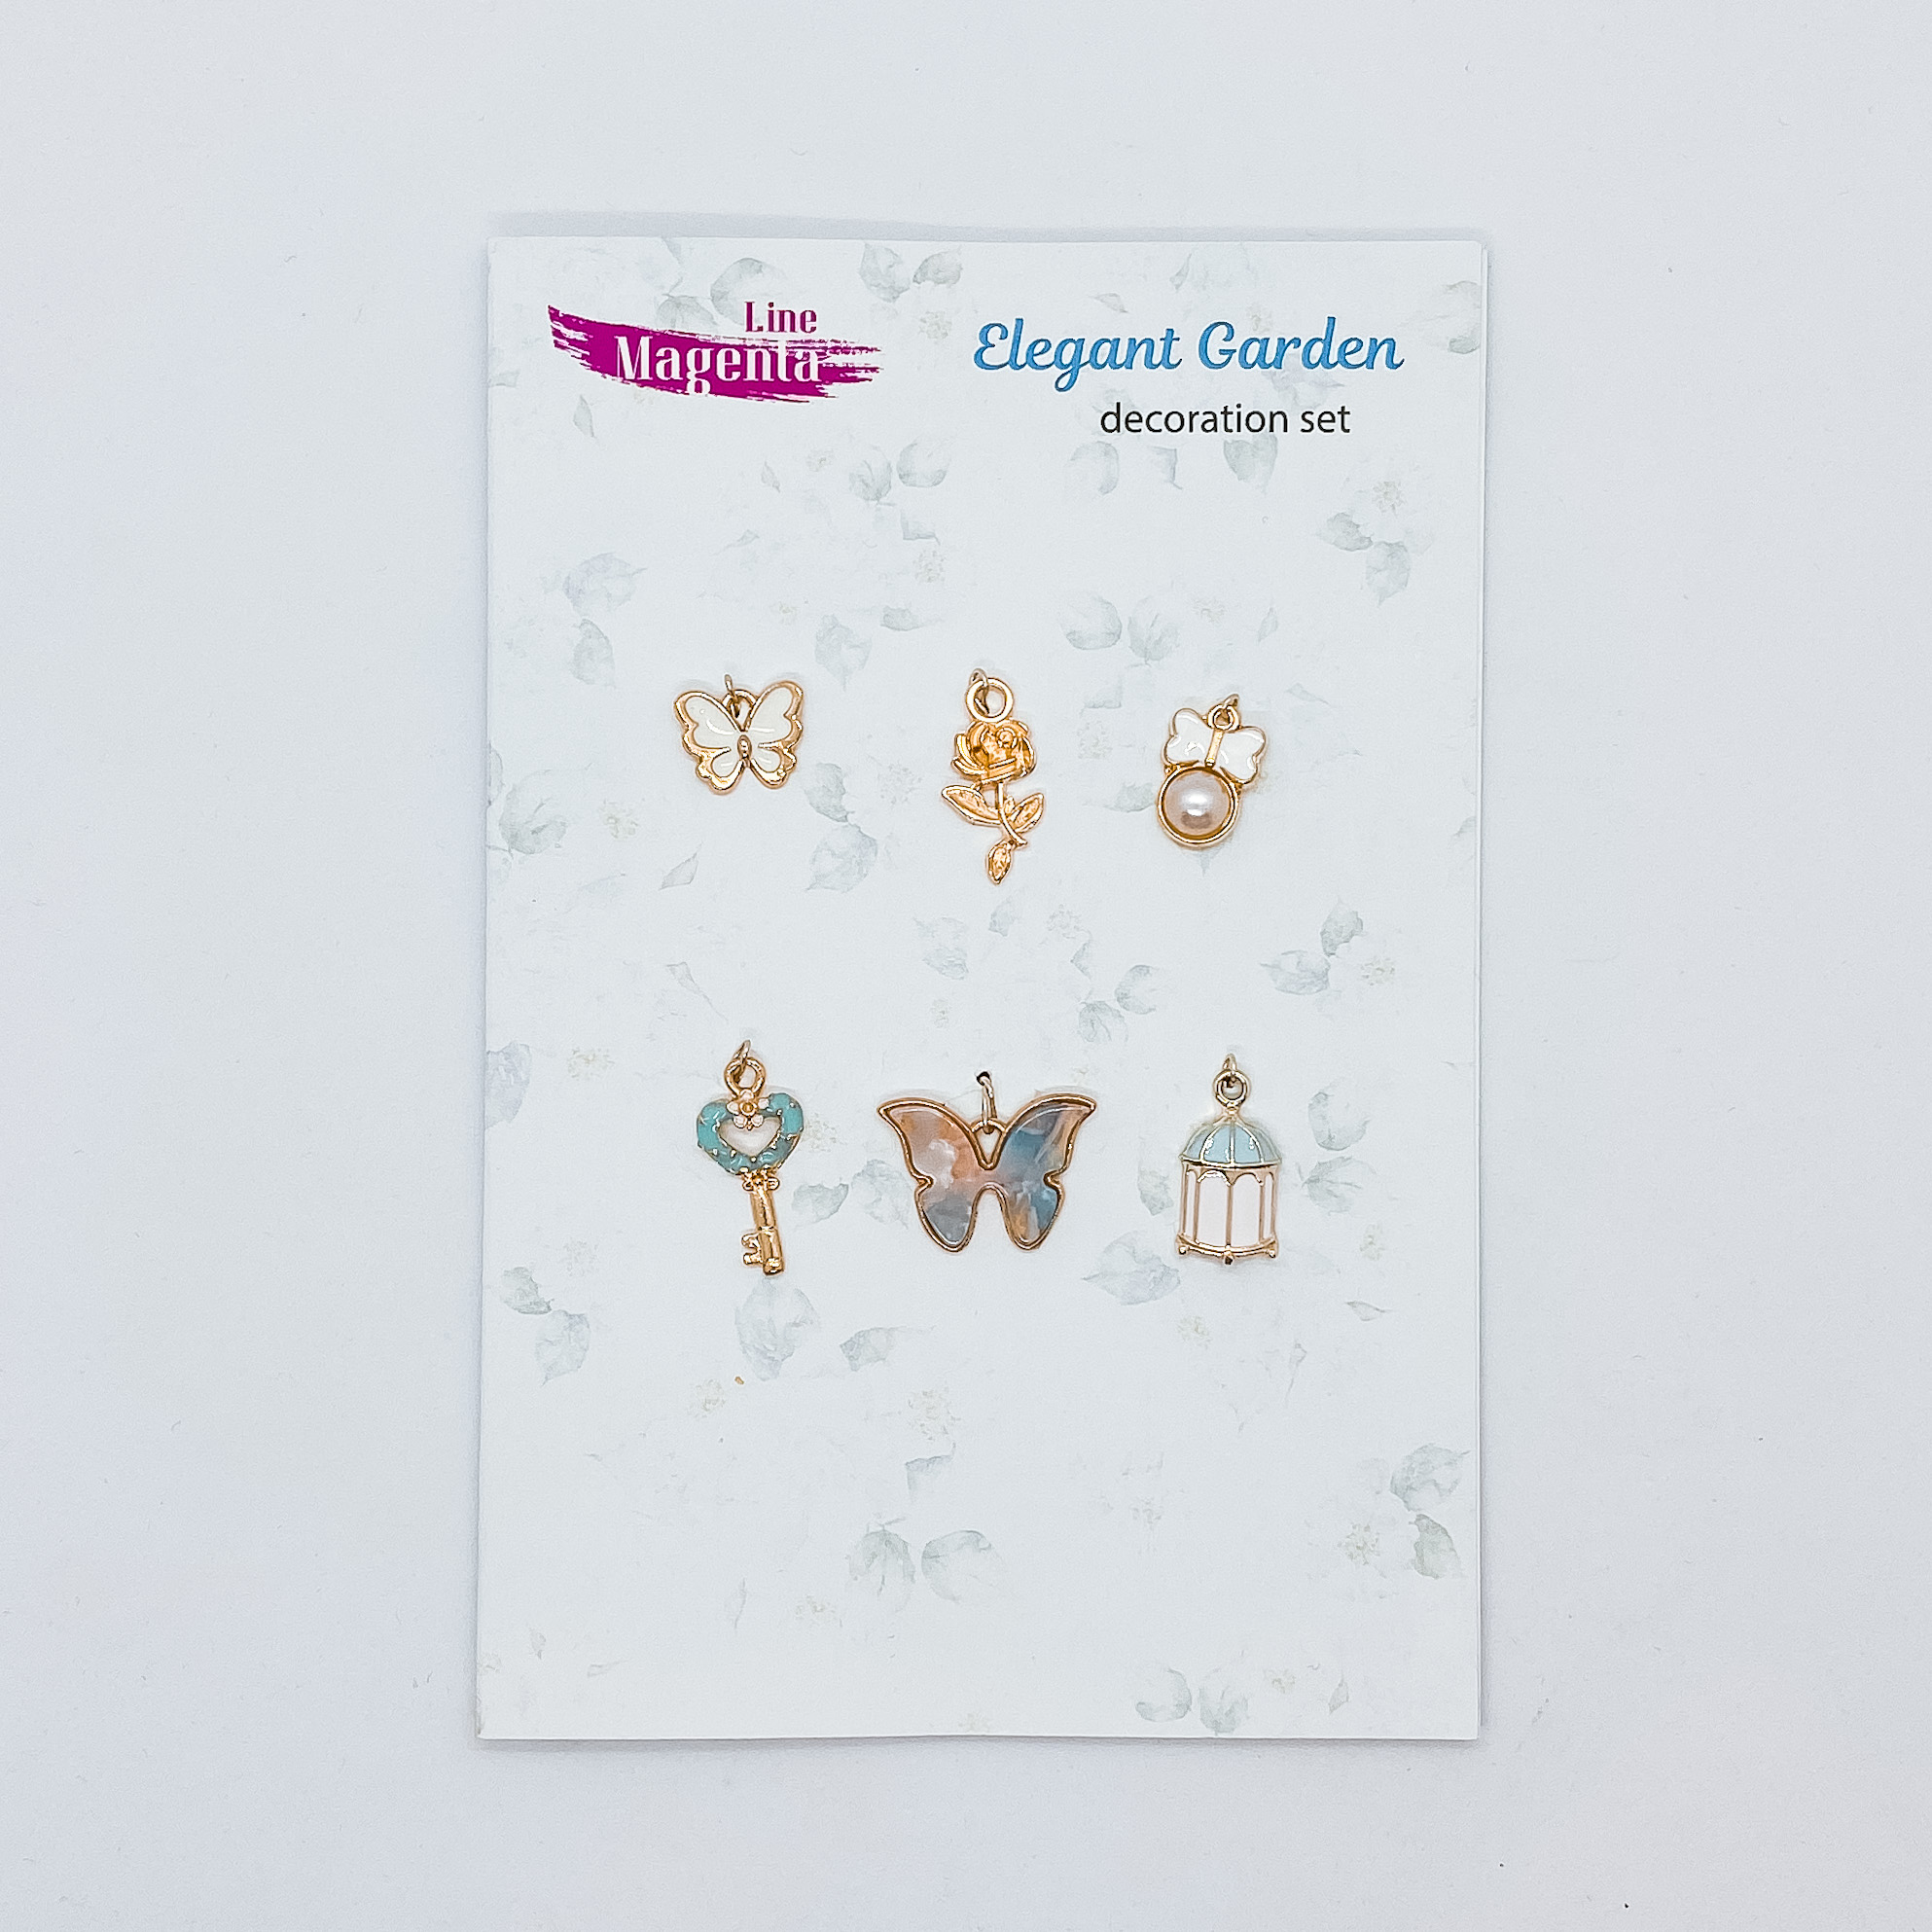 Набір декору для скрапбукінгу, 6 елементів, Elegant Garden, Magenta Line